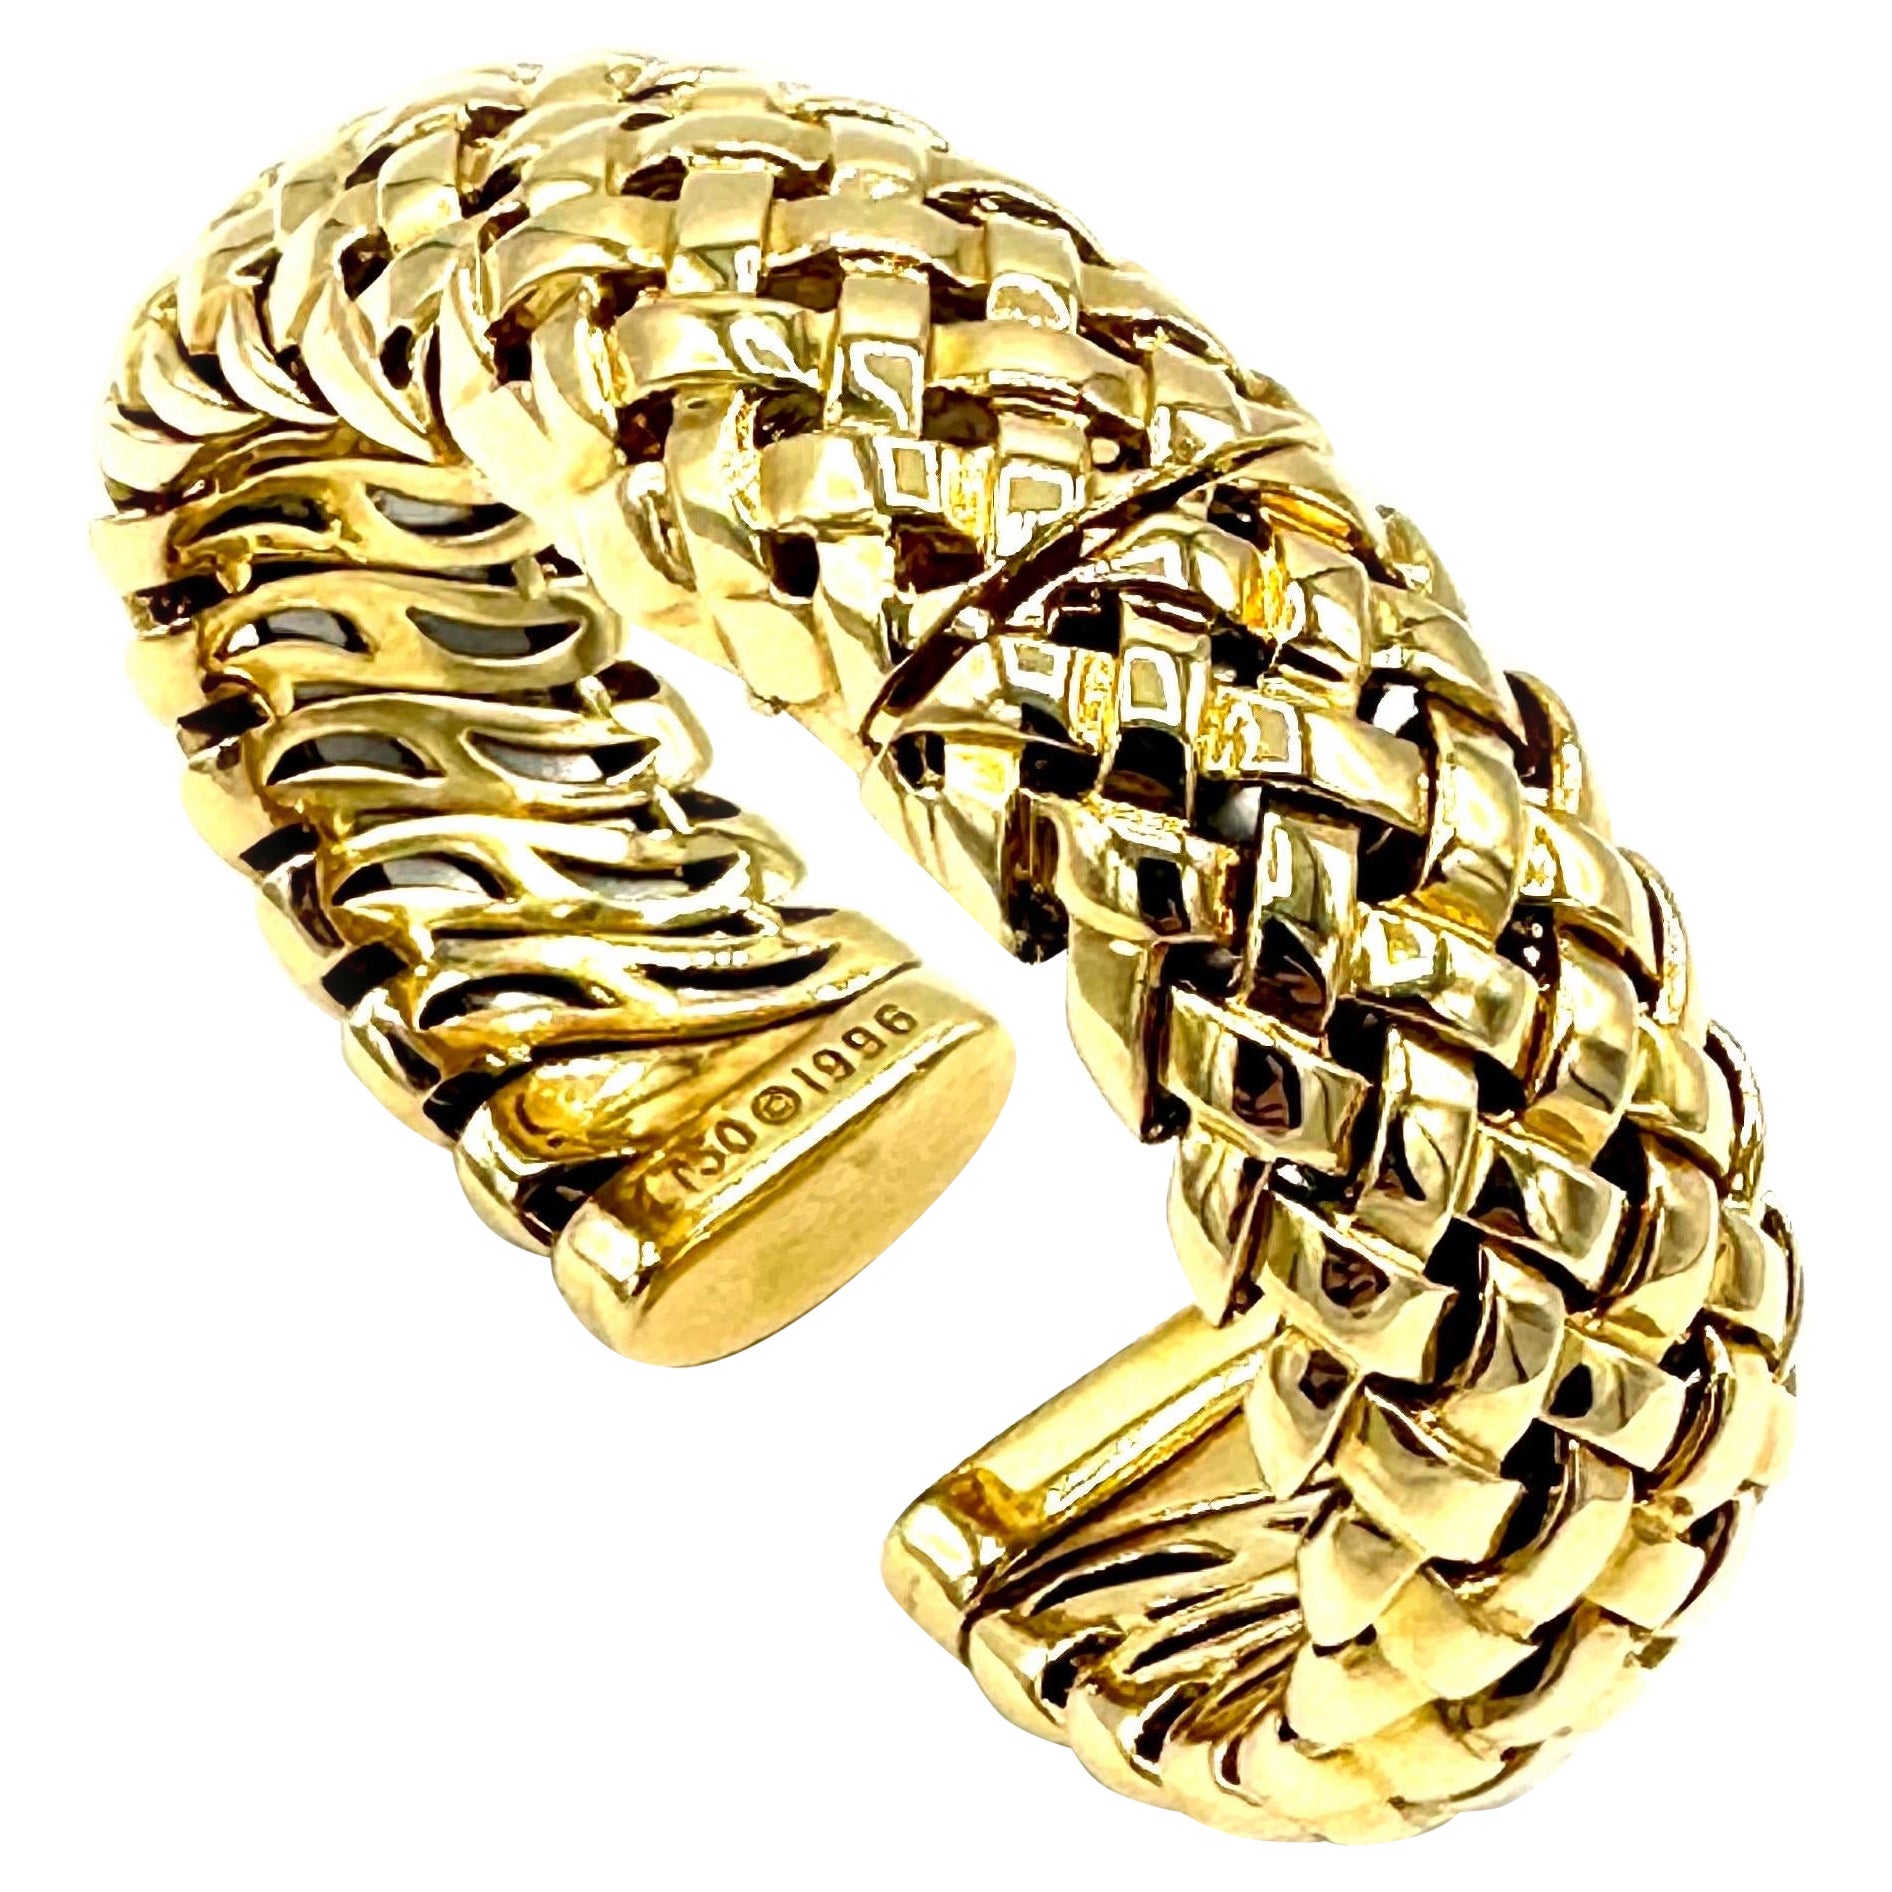 Tiffany & Co. 18k Yellow Gold Basket Weave Bangle Bracelet Watch For Sale